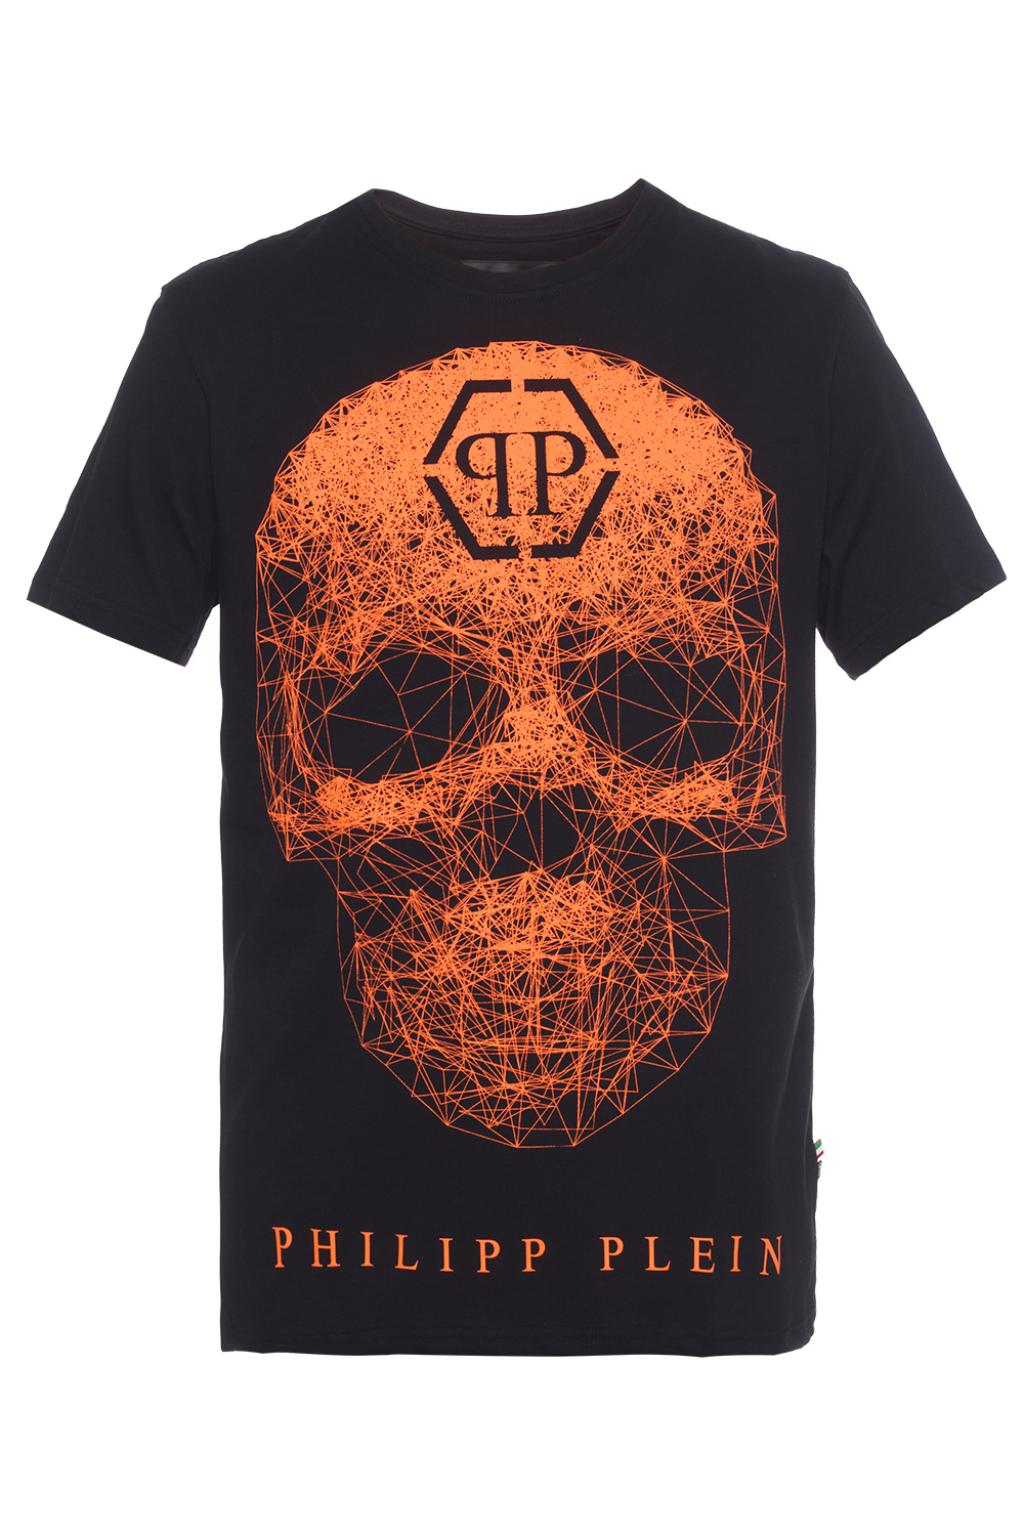 philipp plein orange skull